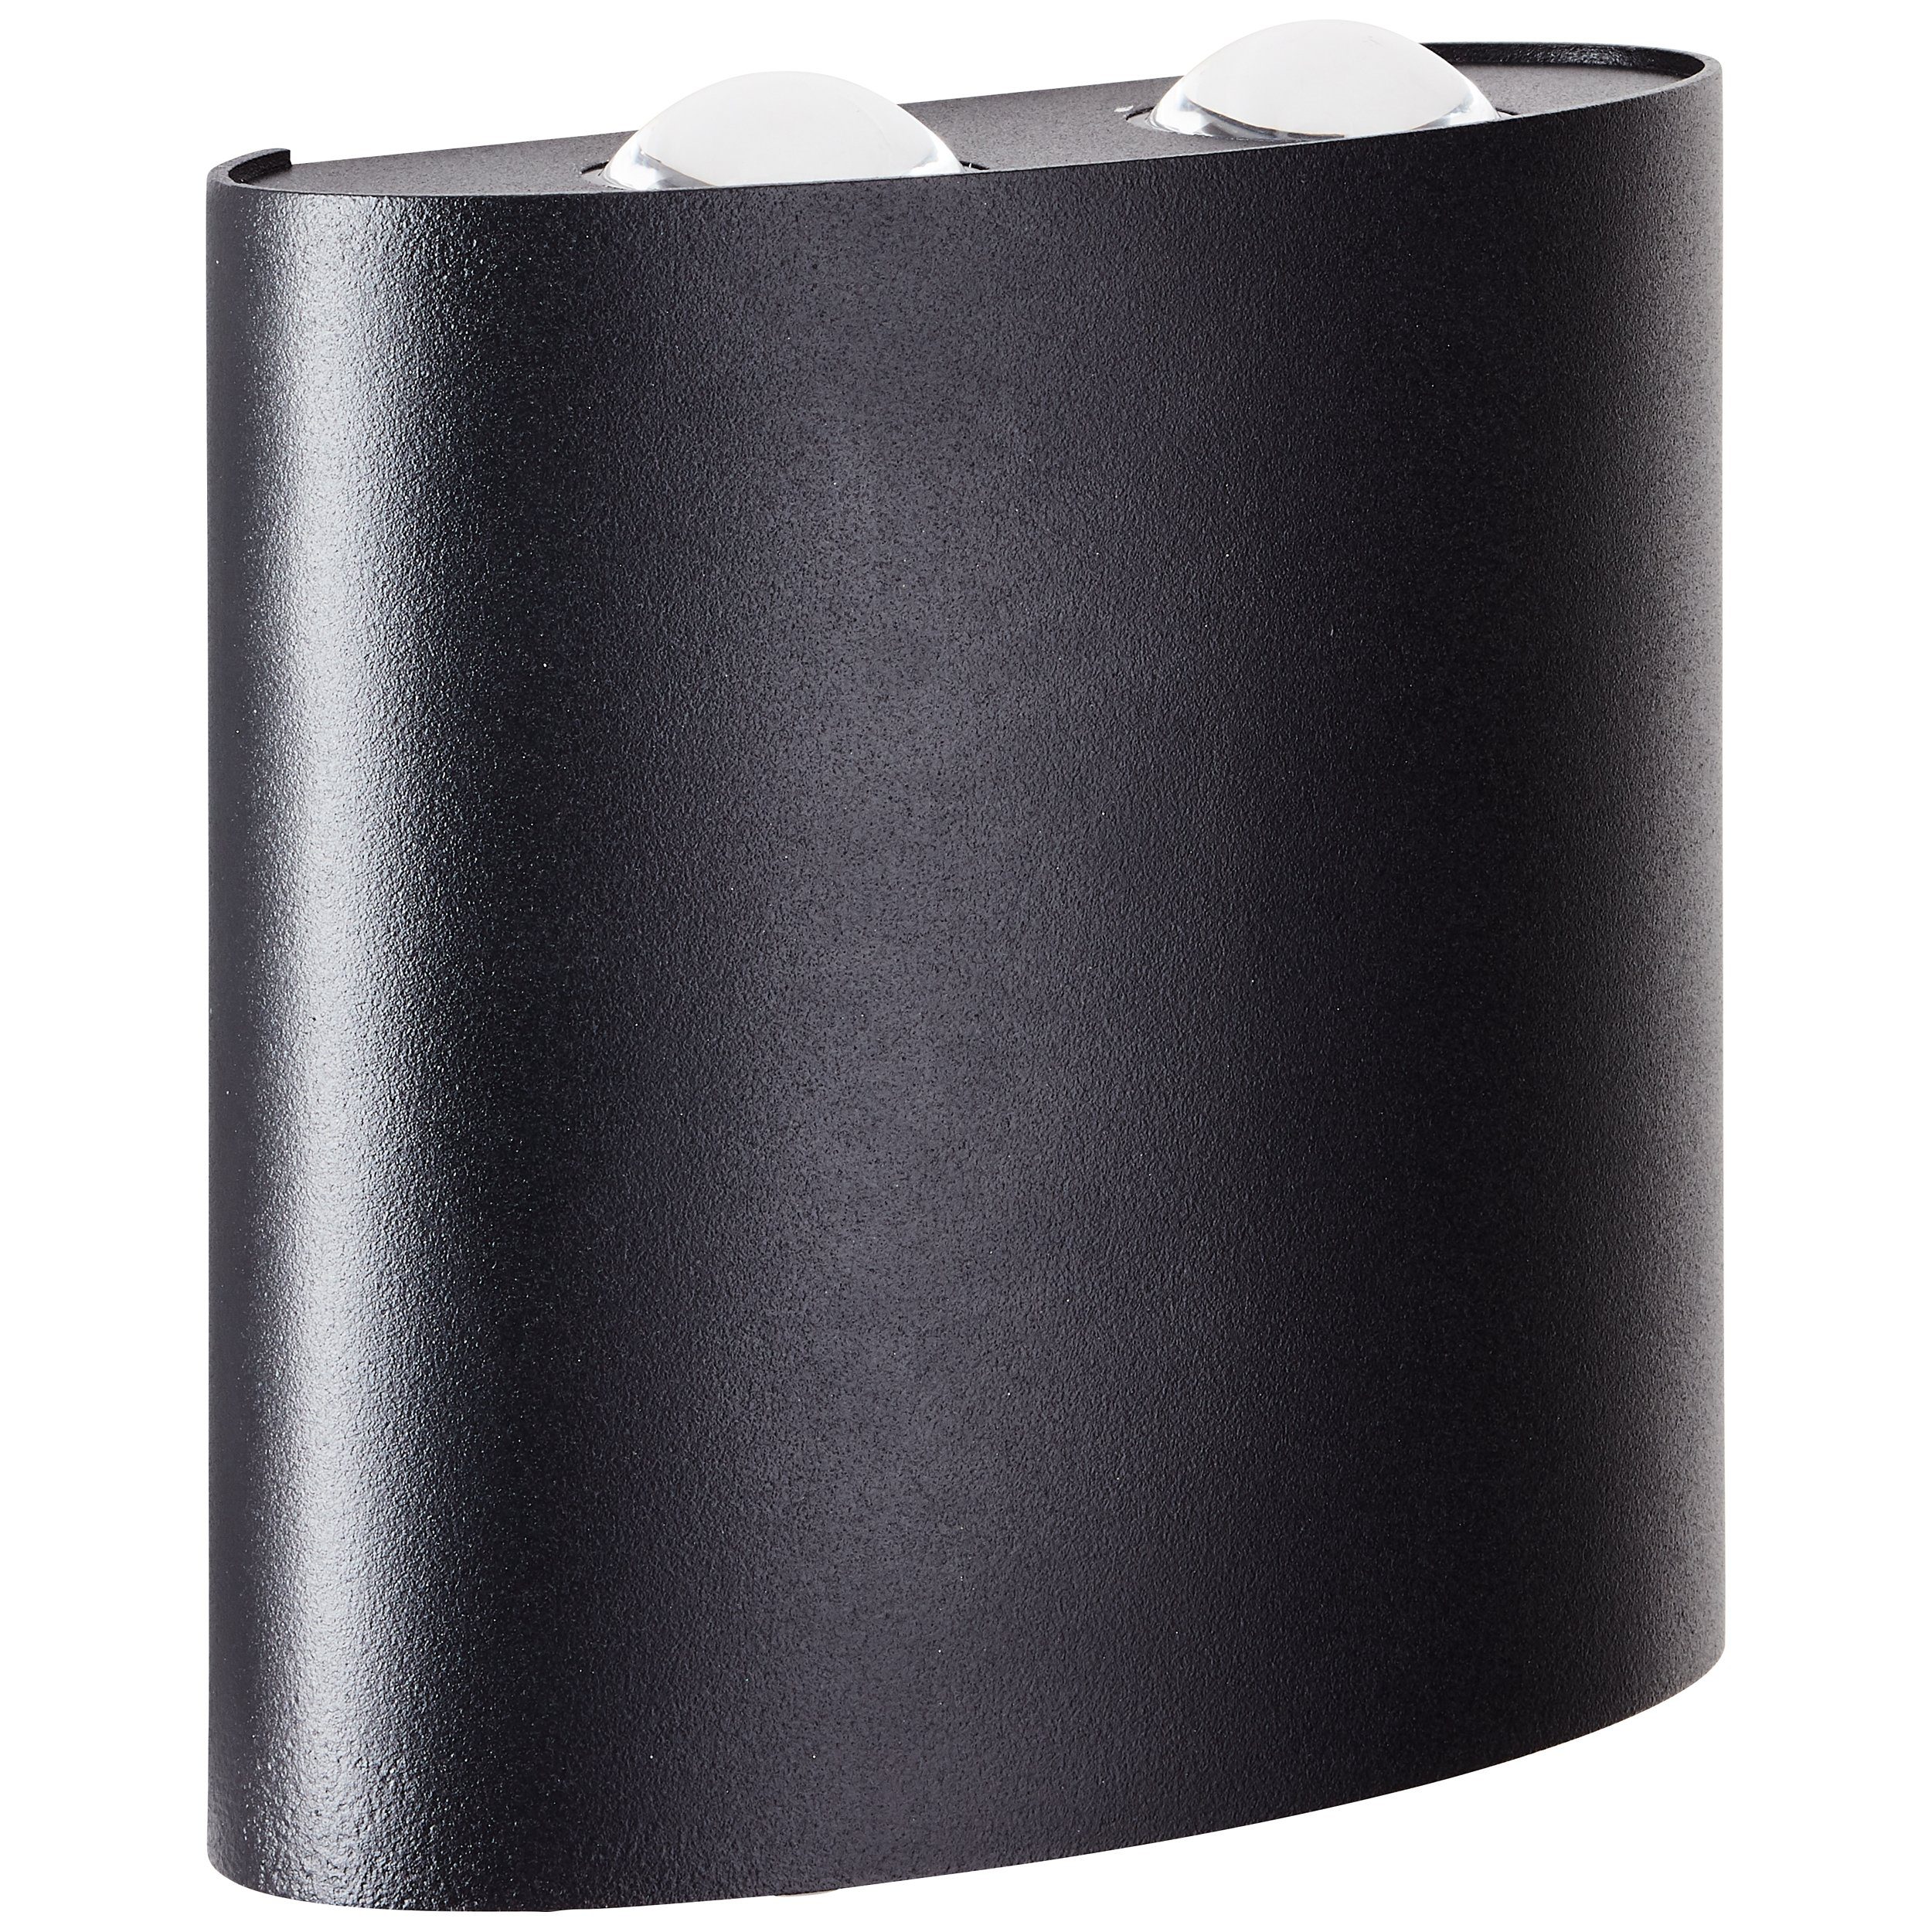 L schwarz, LED 4x Tursdale, Außenwandleuchte Außen-Wandleuchte Tursdale Aluminium/Kunststoff, Brilliant LED sand